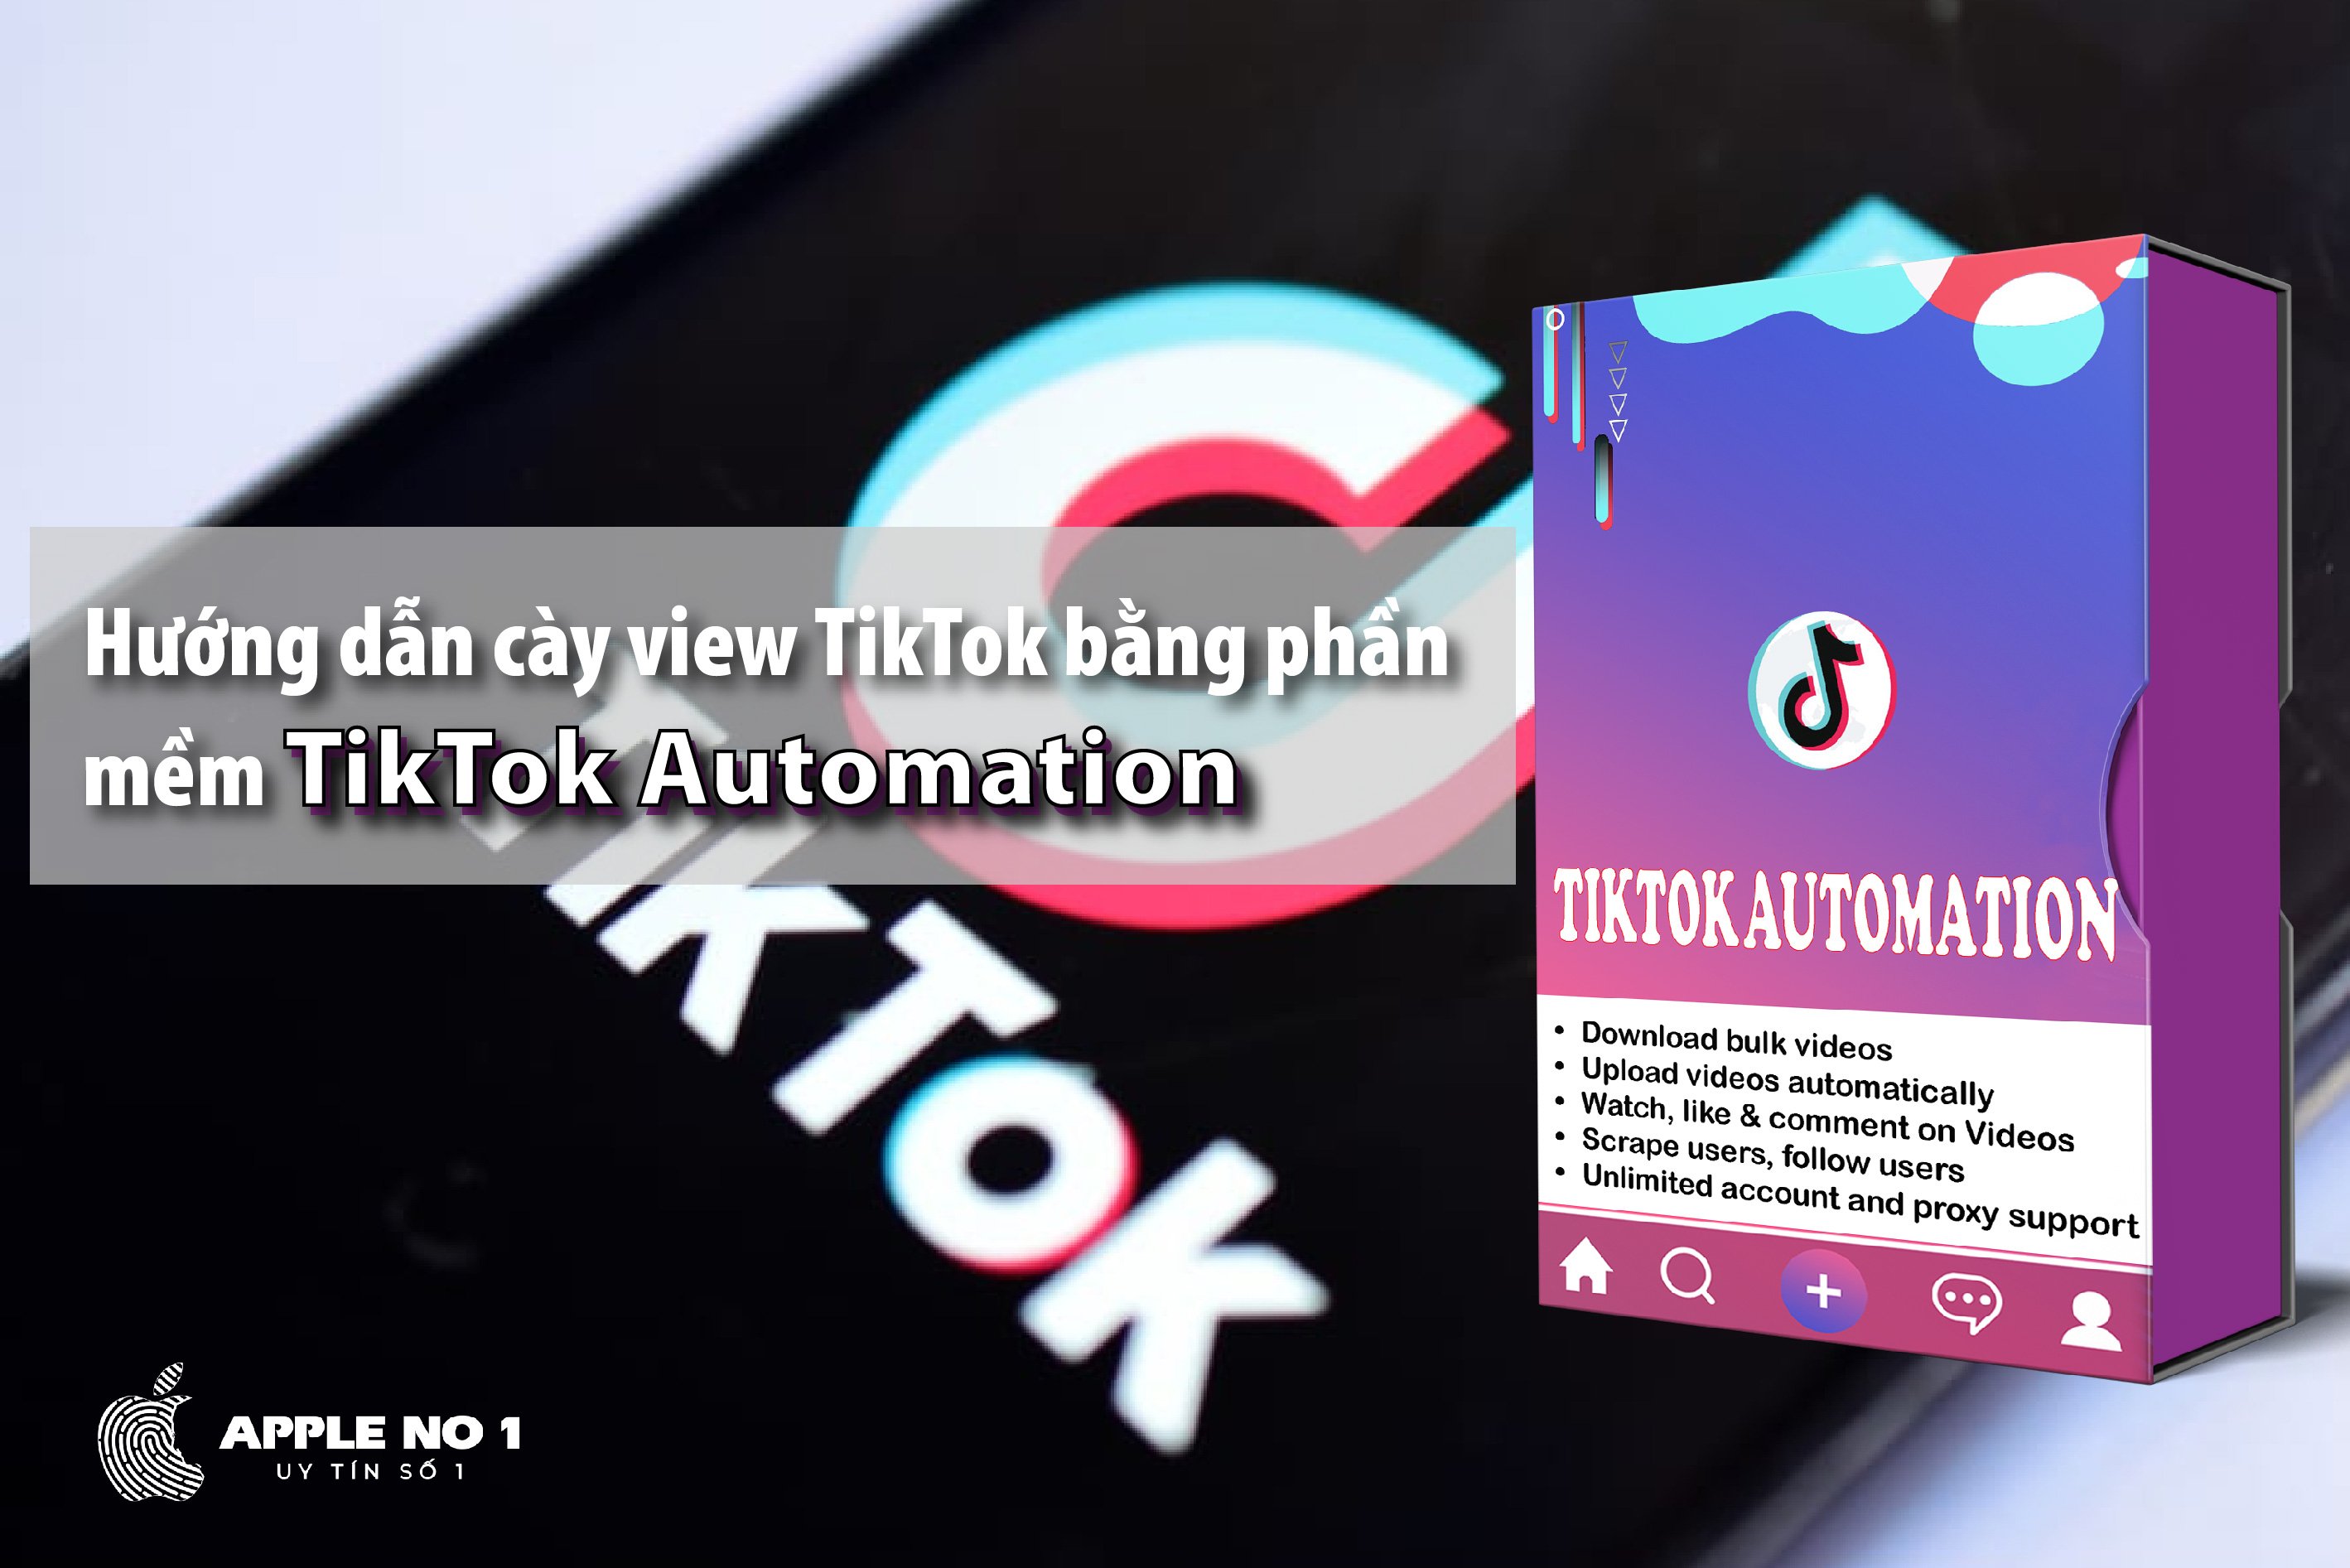 Huong dan cay view TikTok bang phan mem TikTok Automation